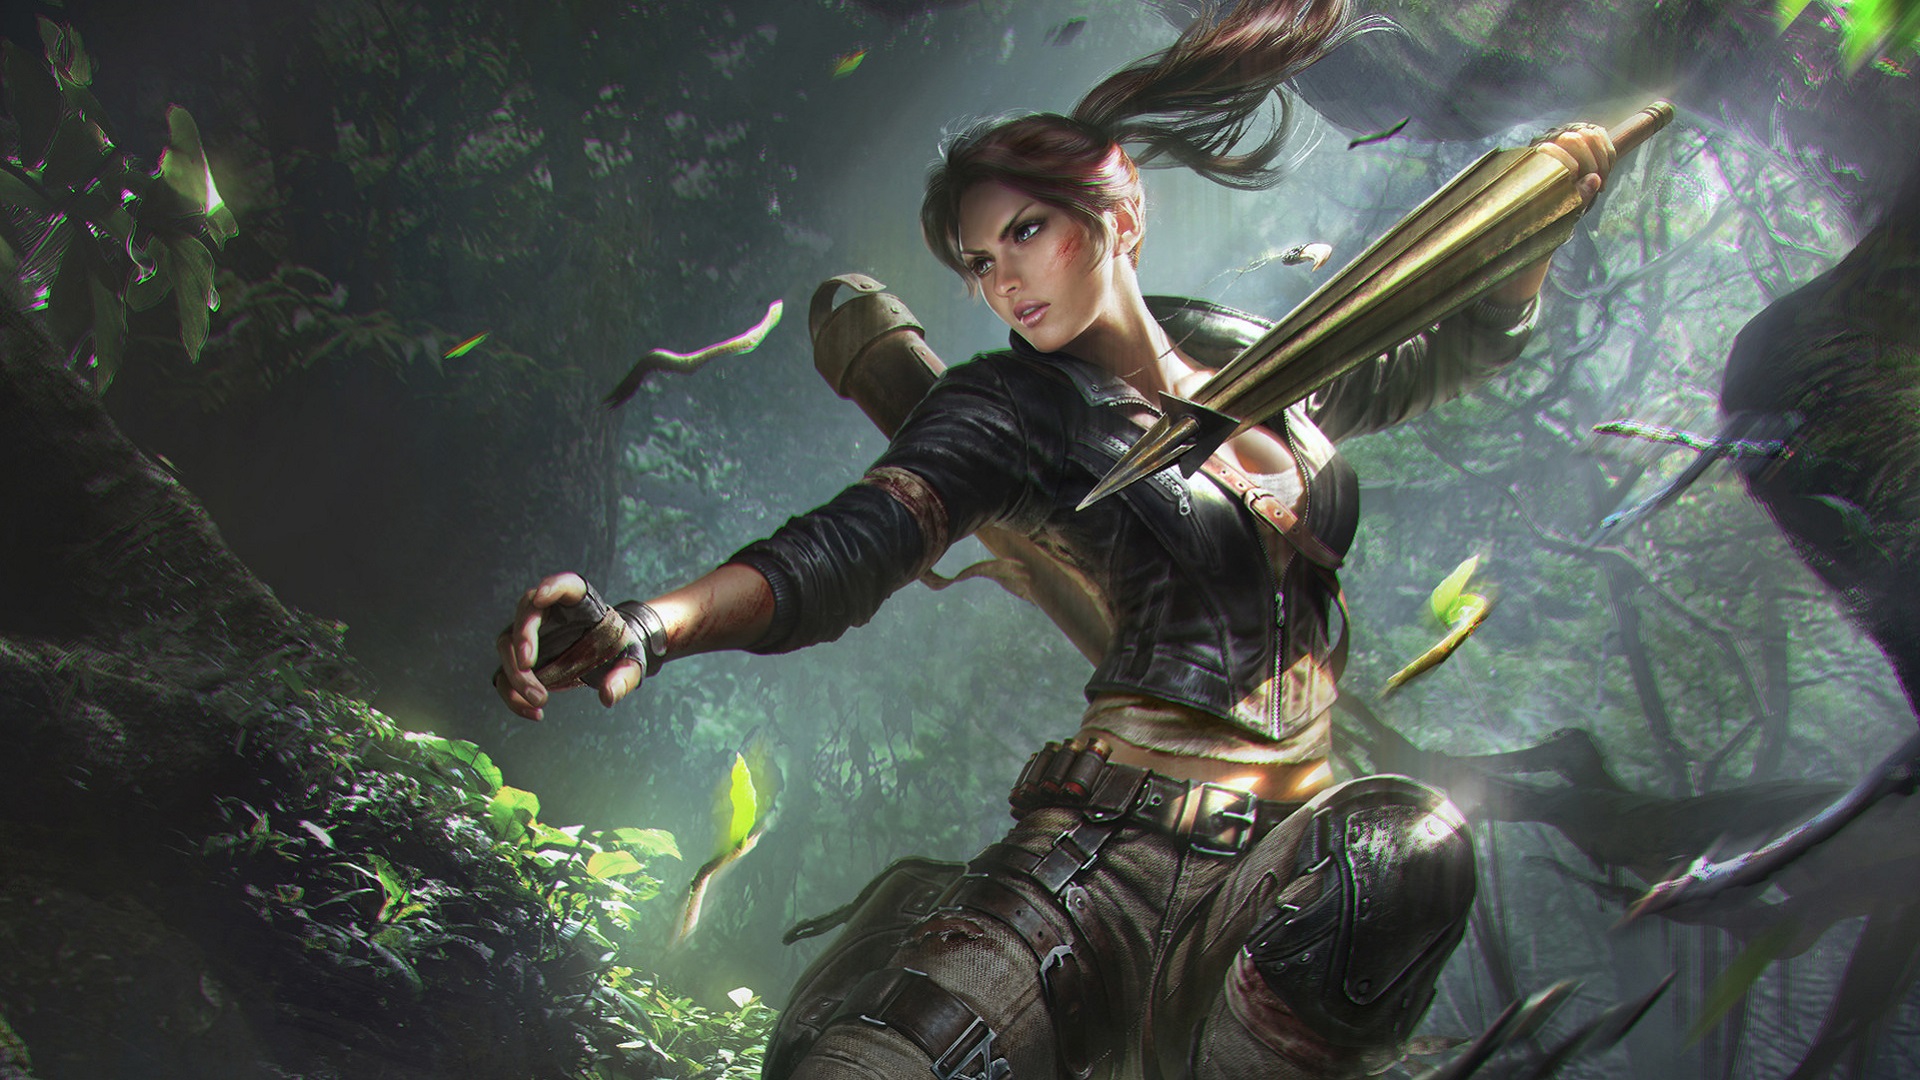 Desktop Wallpaper Lara Croft Tomb Raider Video Game Digital Art Hd Image Picture